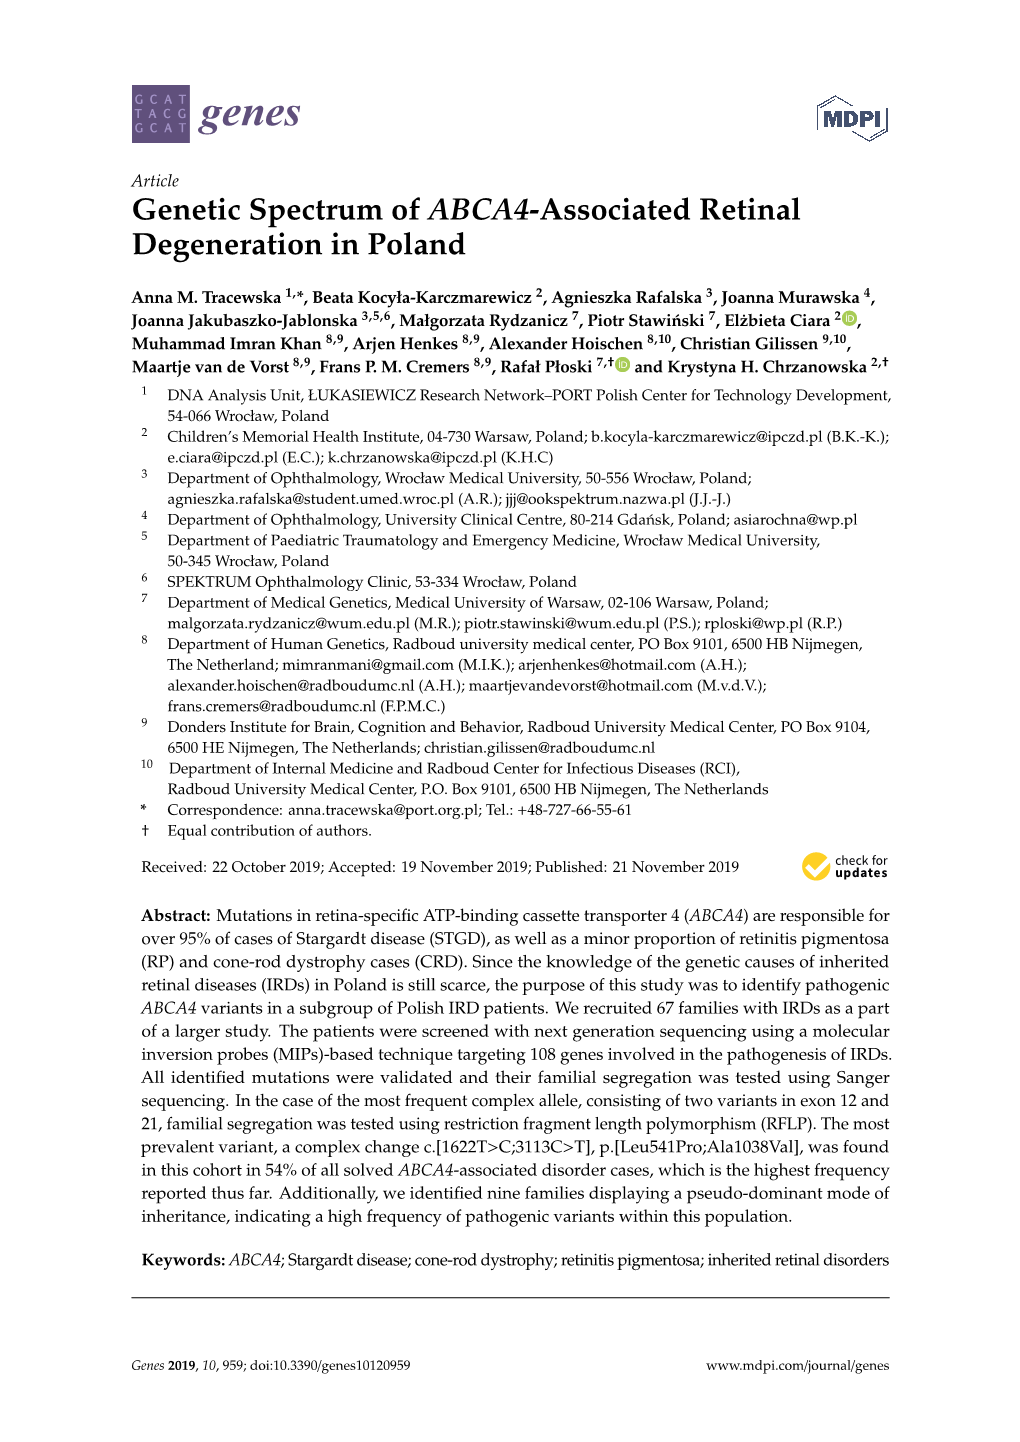 Genetic Spectrum of ABCA4-Associated Retinal Degeneration in Poland